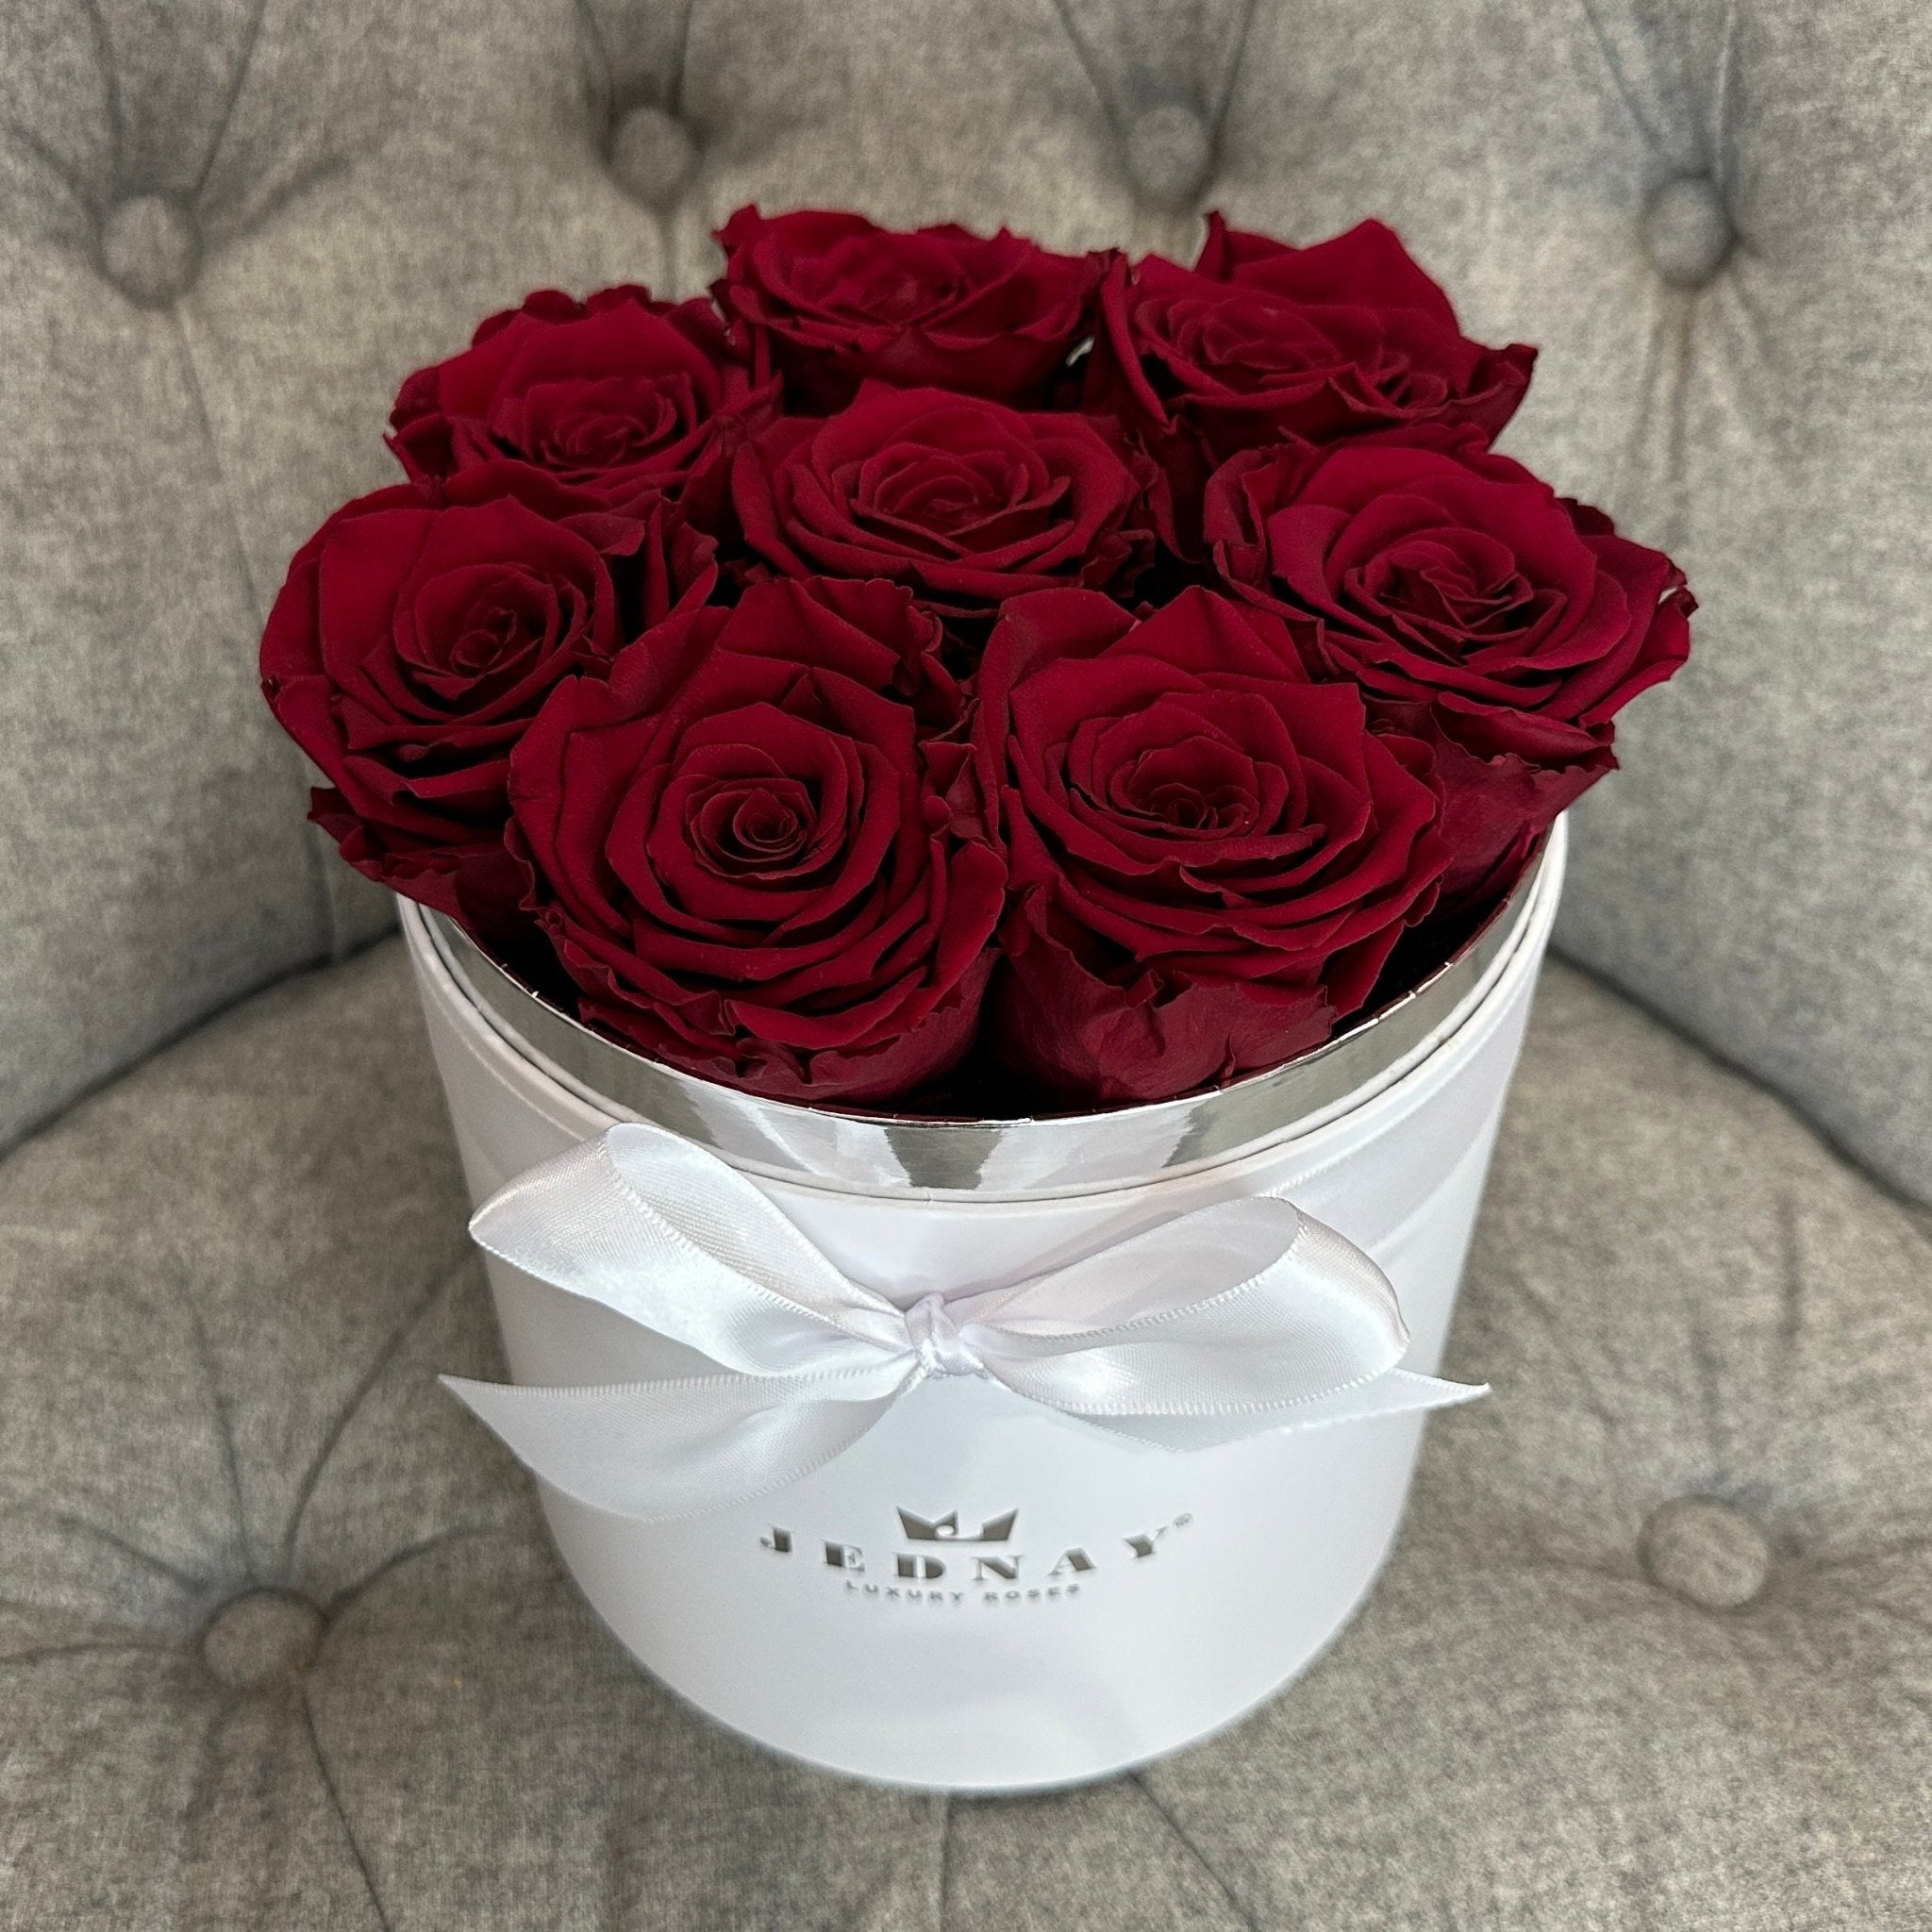 Medium Classic White Forever Rose Box - Red Red Wine Eternal Roses - Jednay Roses